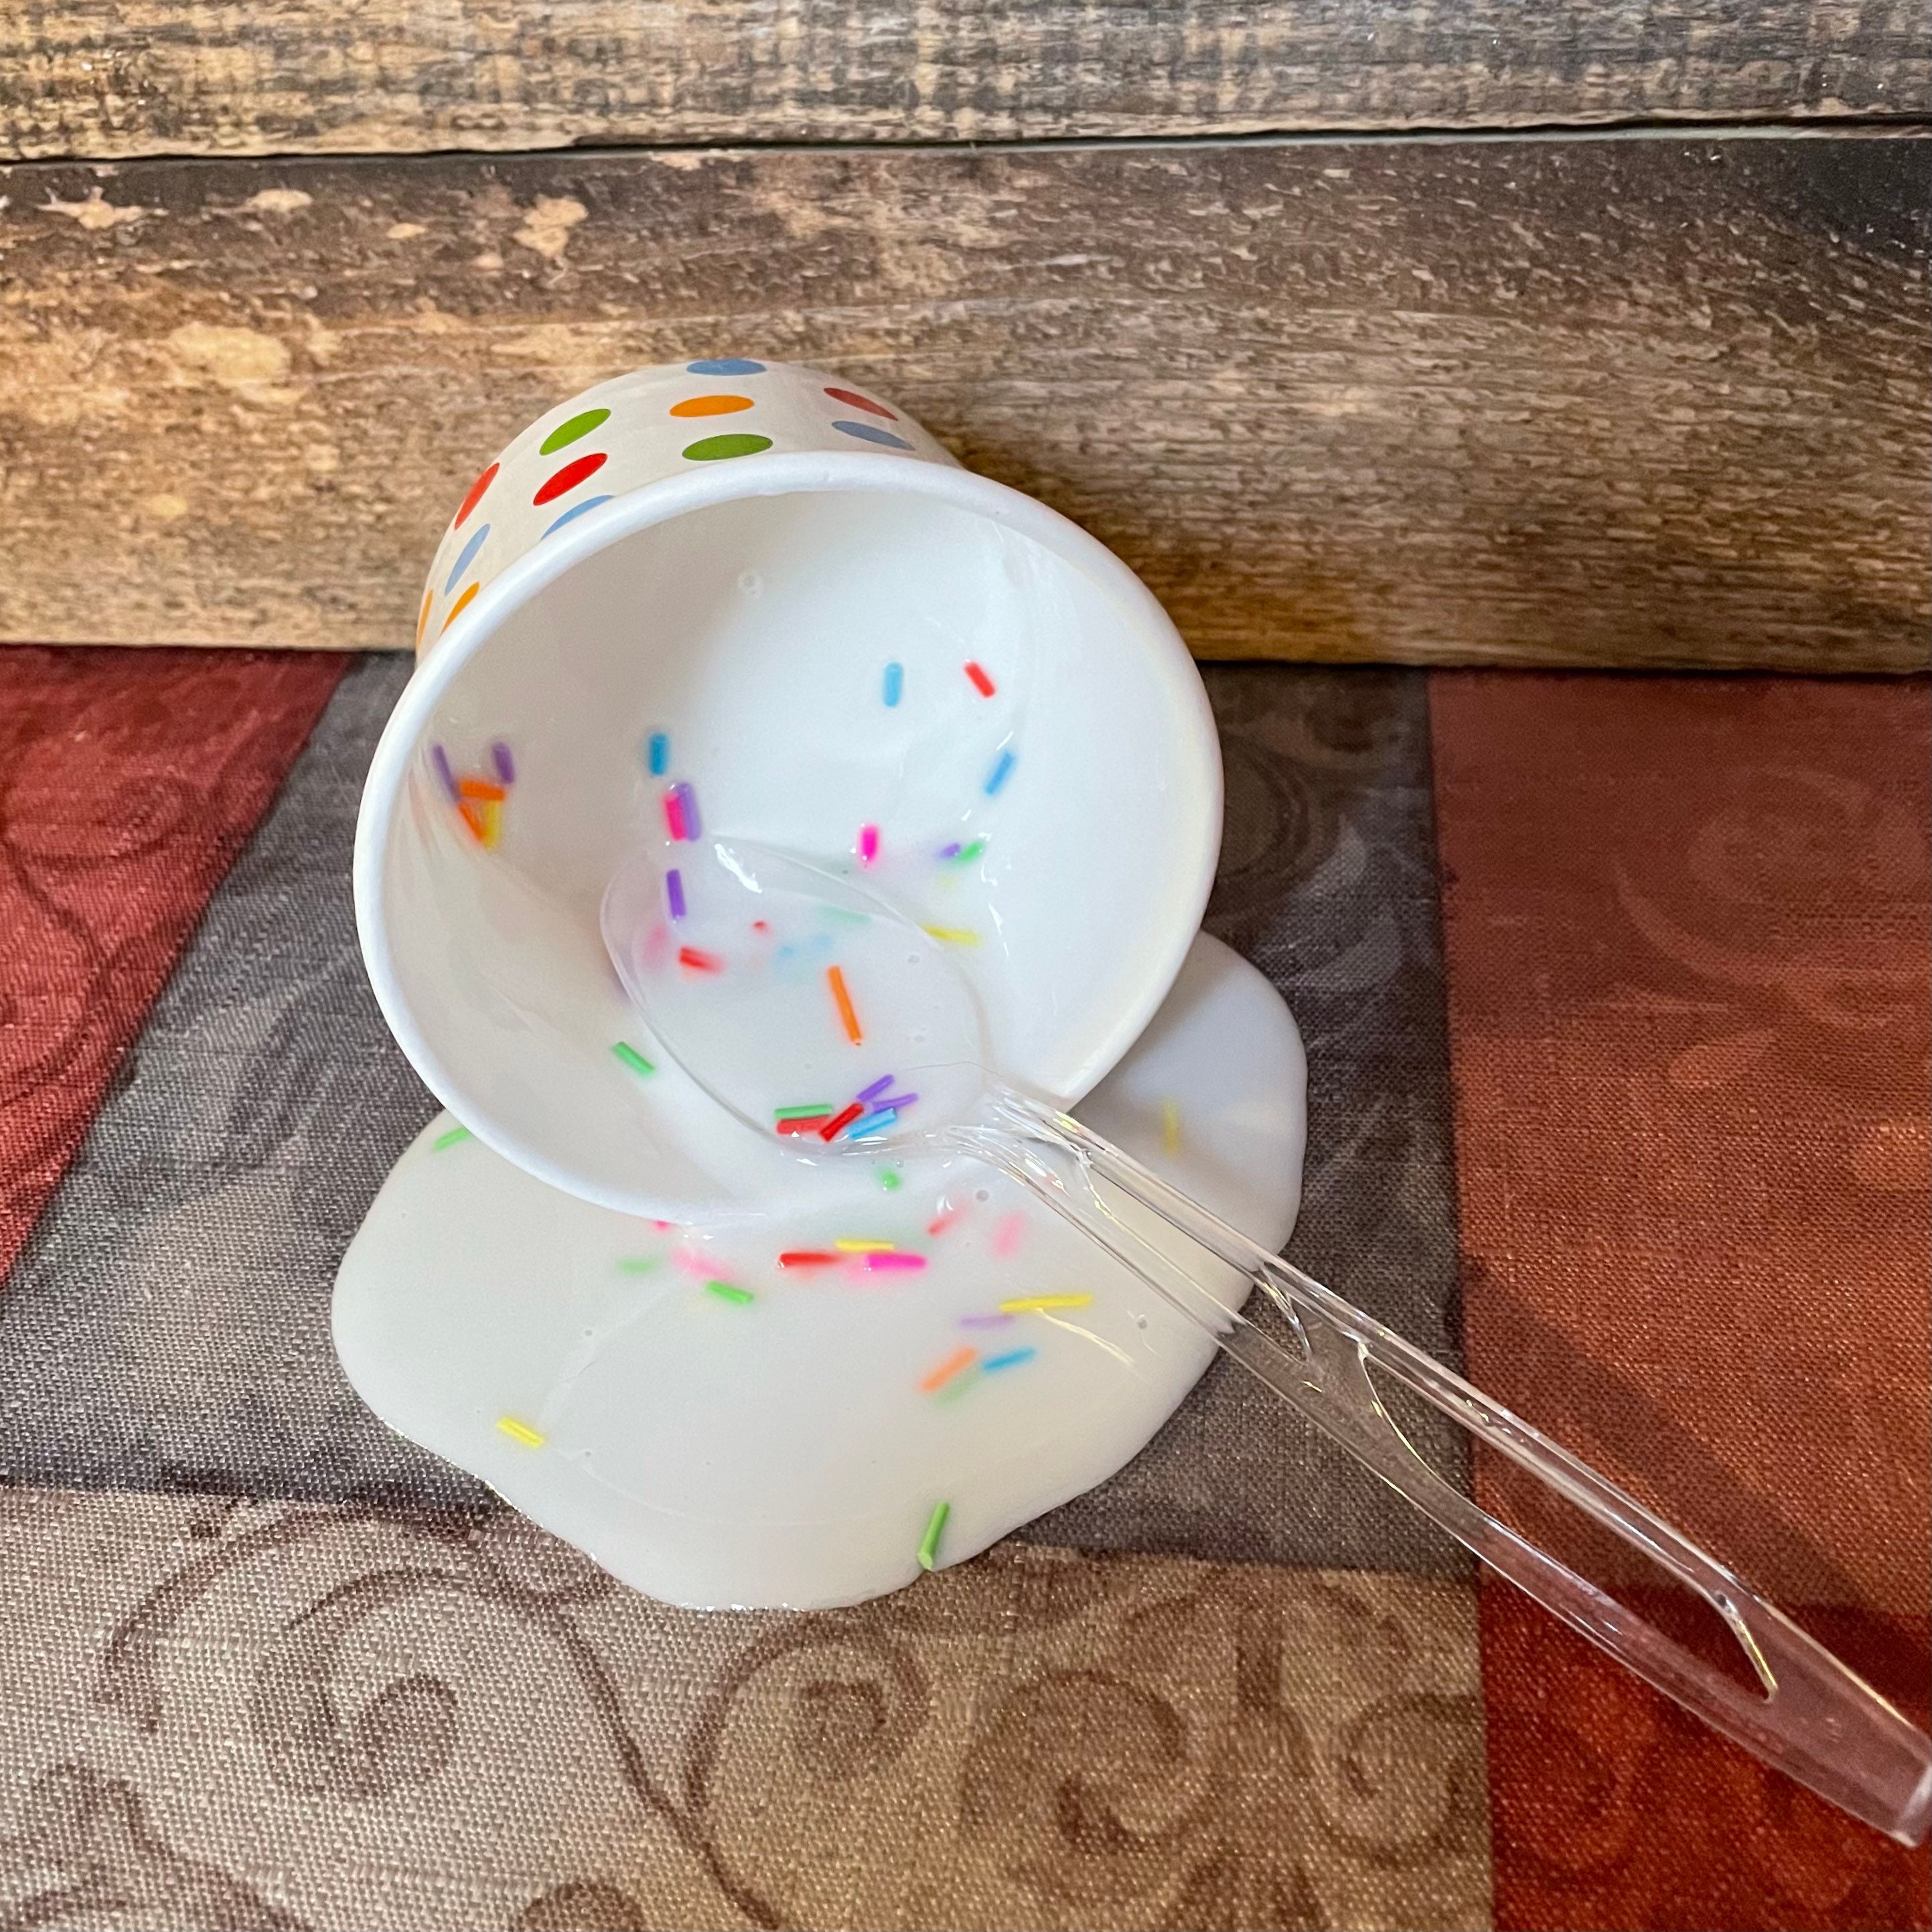 Ceramic Fake Joke Coffee Spill in Mug with Spoon